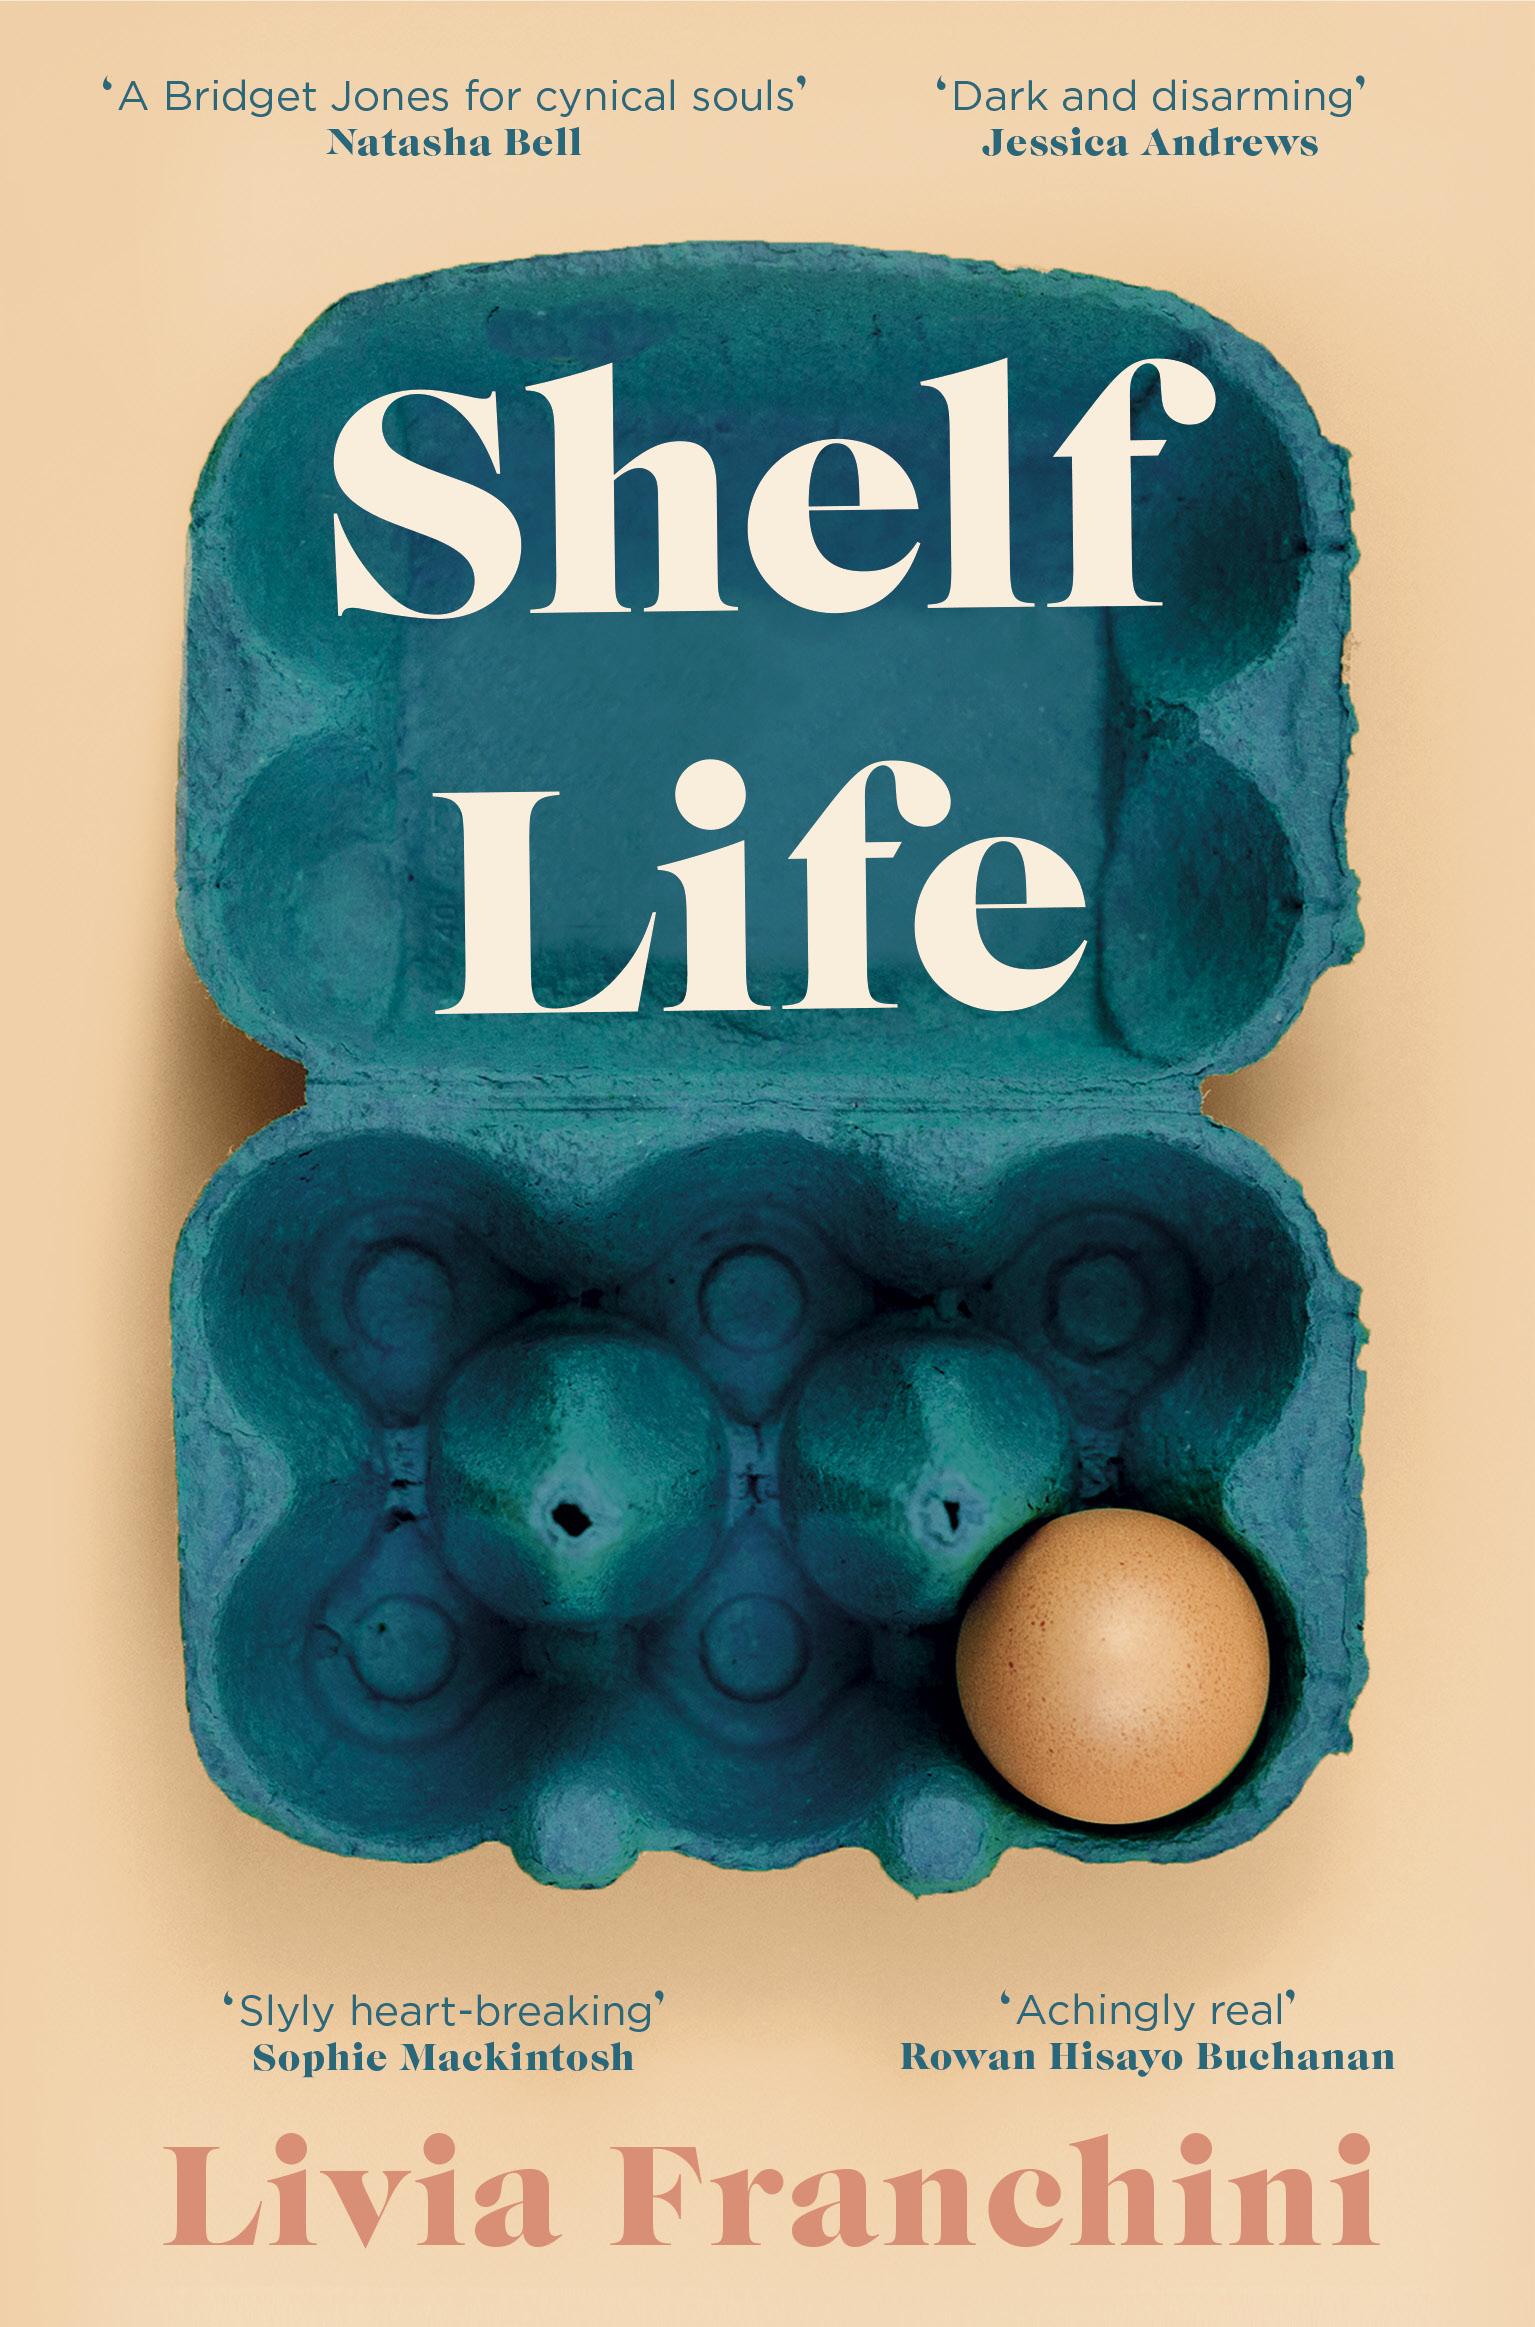 Shelf Life - Livia Franchini